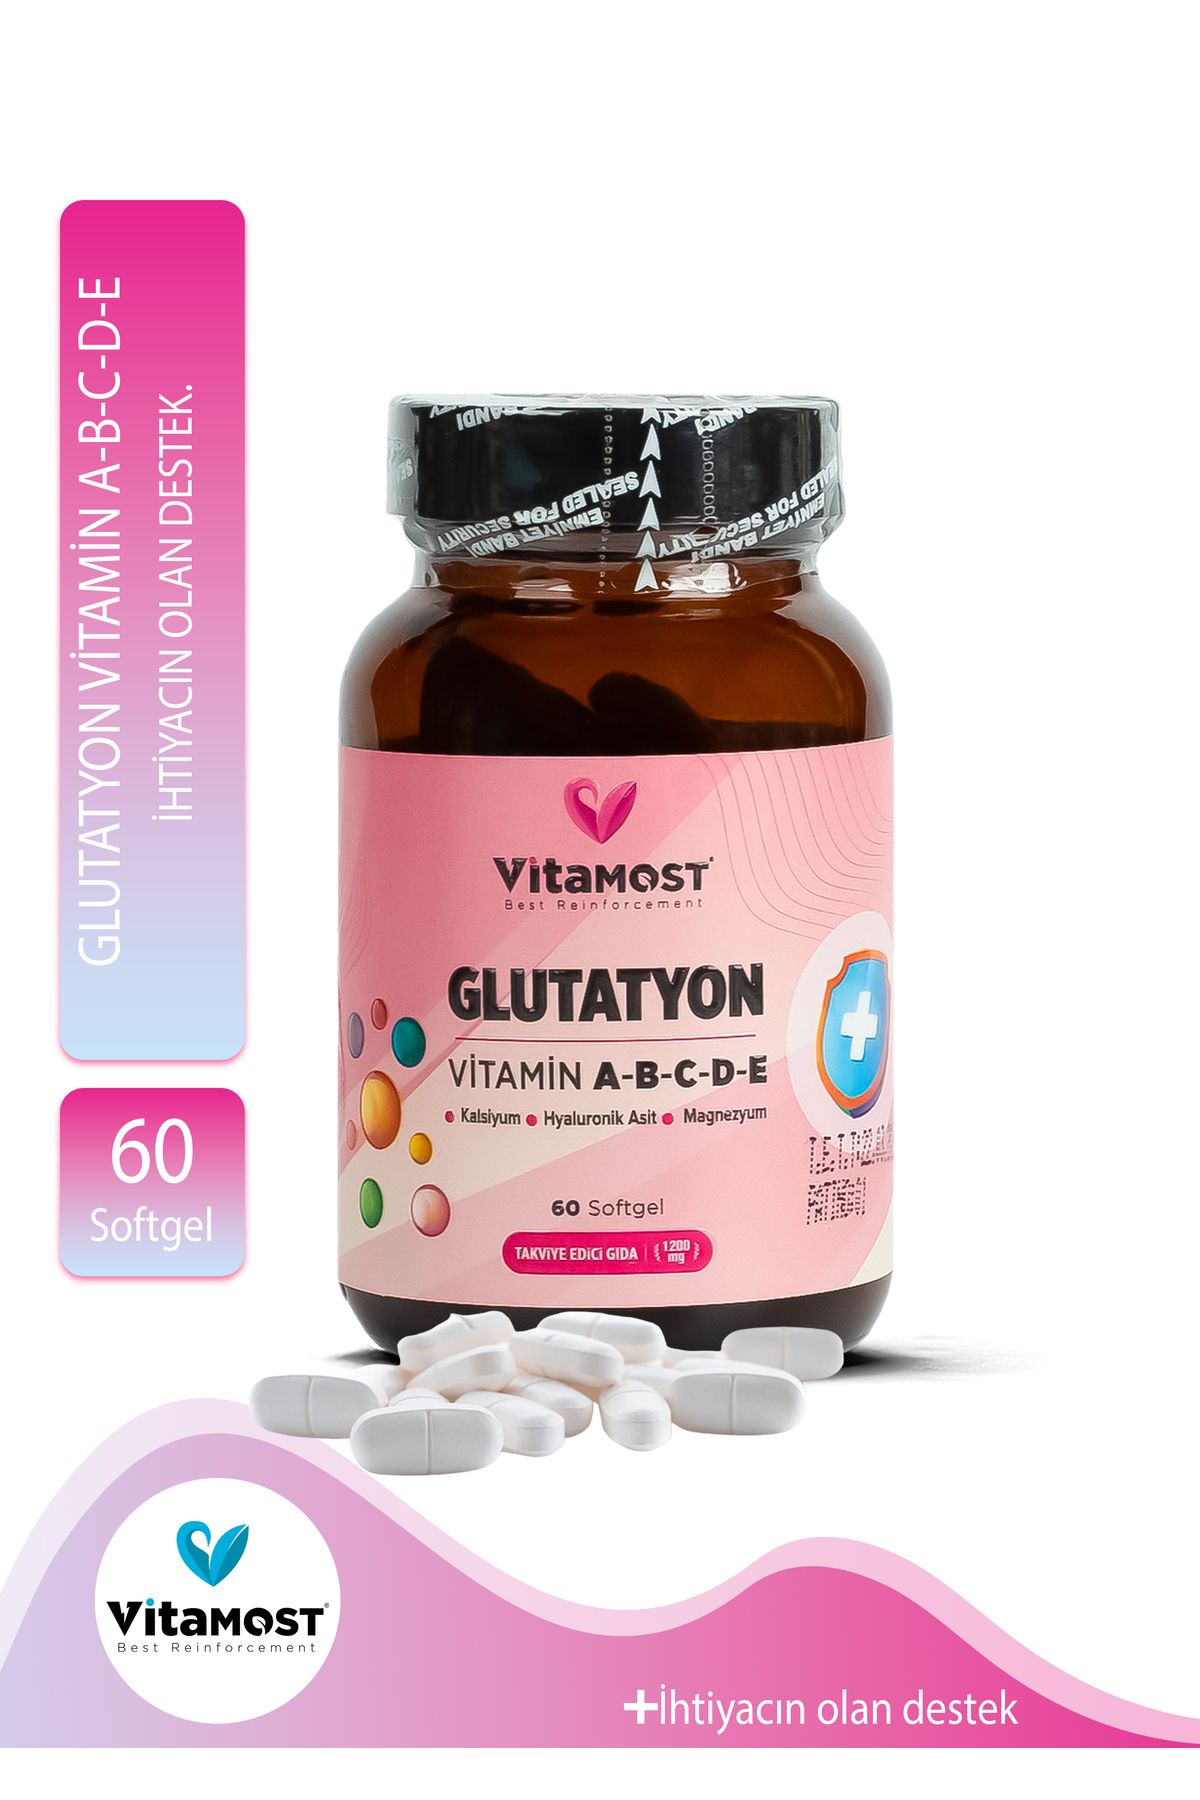 Vitamost Glutatyon, Vitamin A.b.c.d.e. Calcium Magnesium (KALSİYUM MAGNEZYUM) 60 Softgel